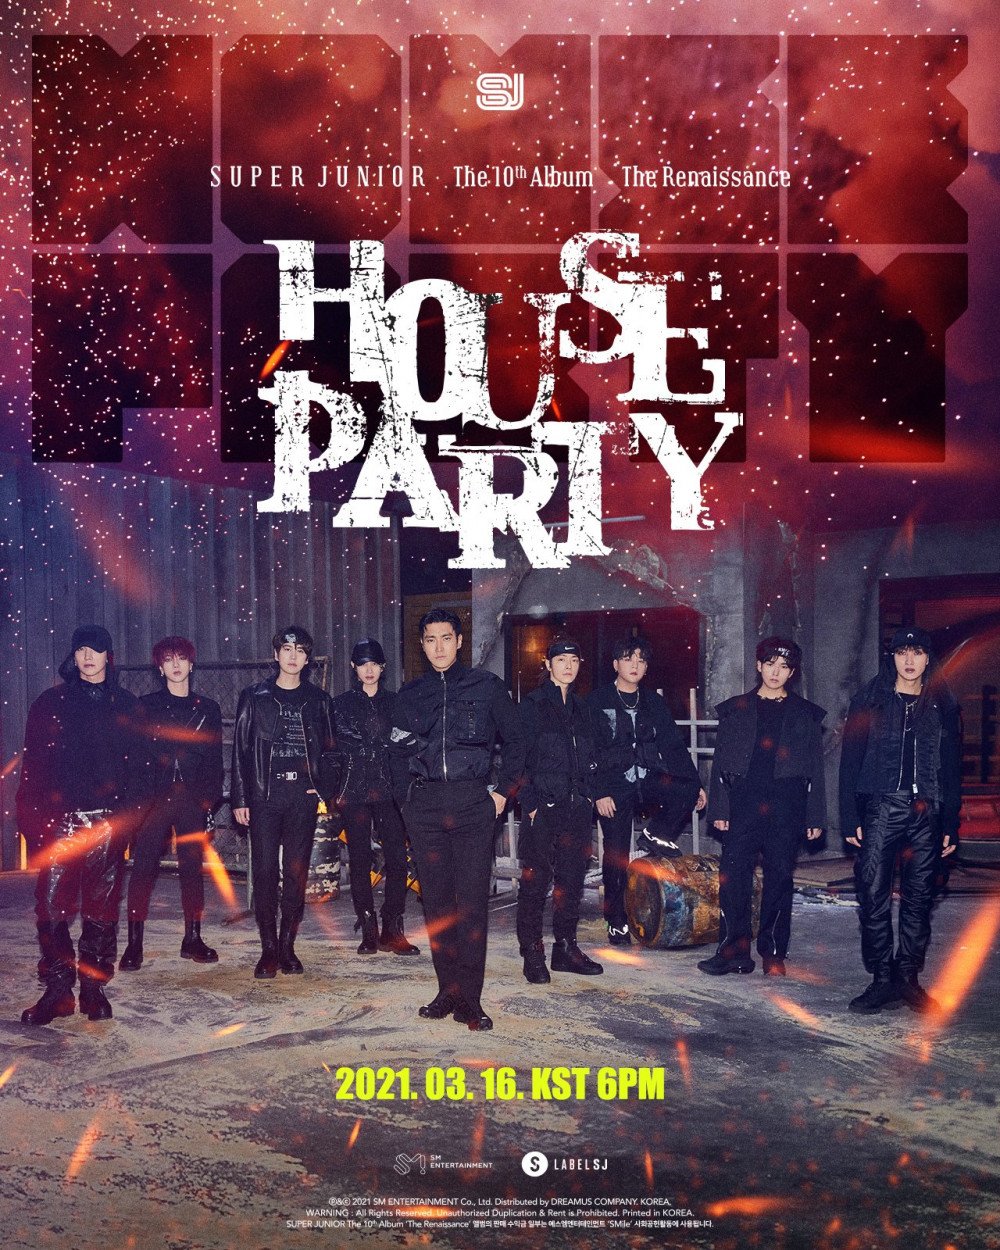 [Камбэк] Super Junior альбом "The Renaissance": музыкальный клип "House Party"